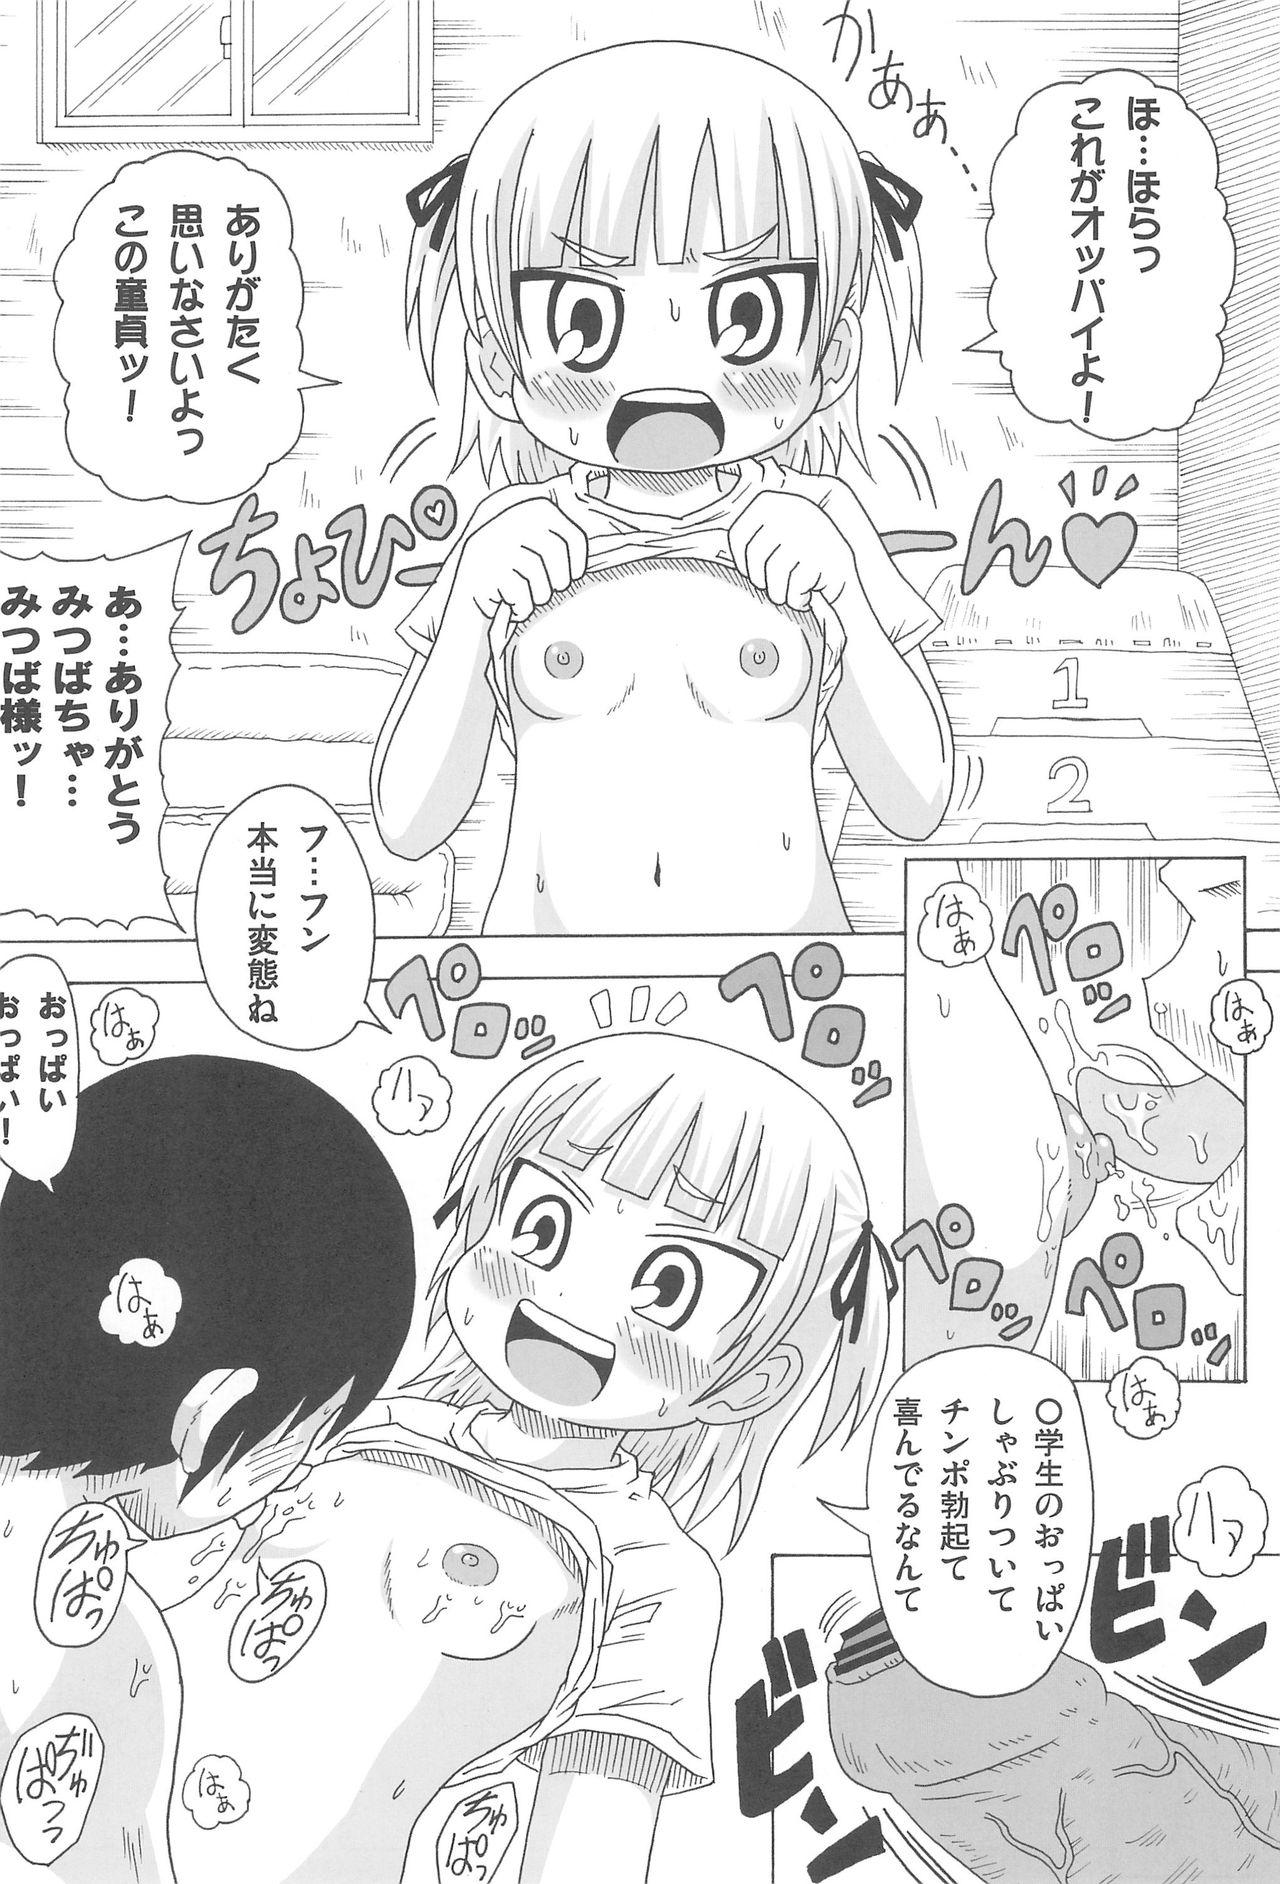 Super Mesubuta Mitsudomo Yarou - Mitsudomoe Internal - Page 6